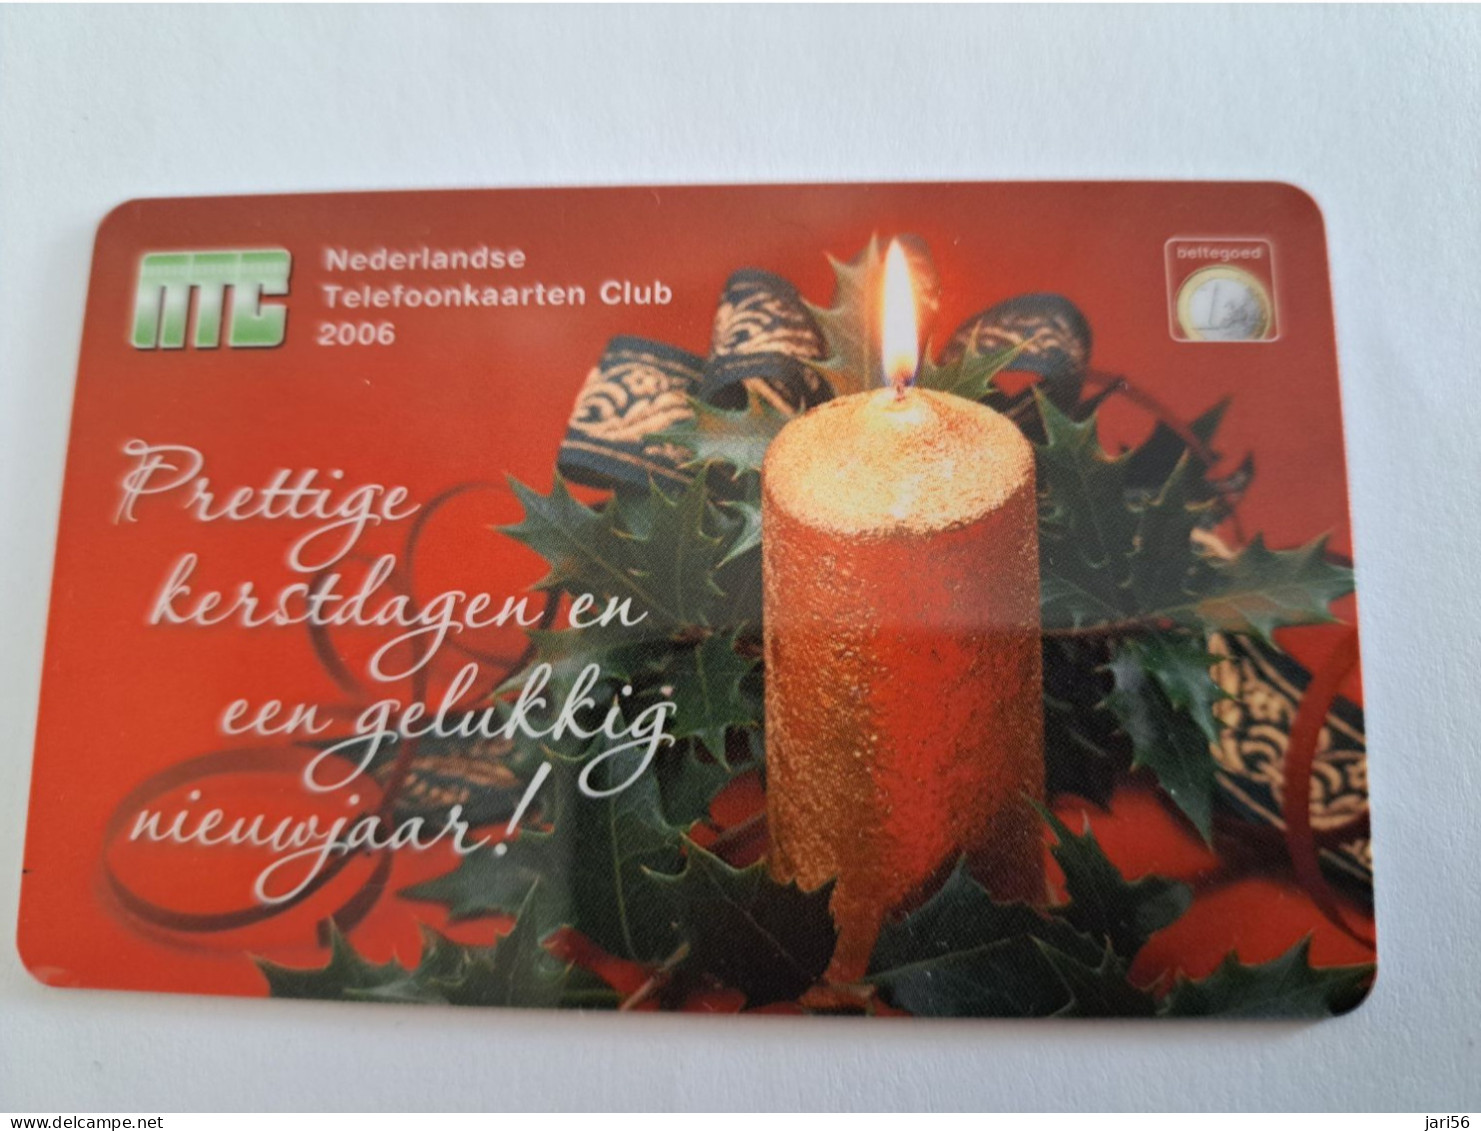 NETHERLANDS /  PREPAID/ NTC CLUB/ MEMBERCARD 2006/  €  1,-   - MINT  CARD  ** 13952** - öffentlich